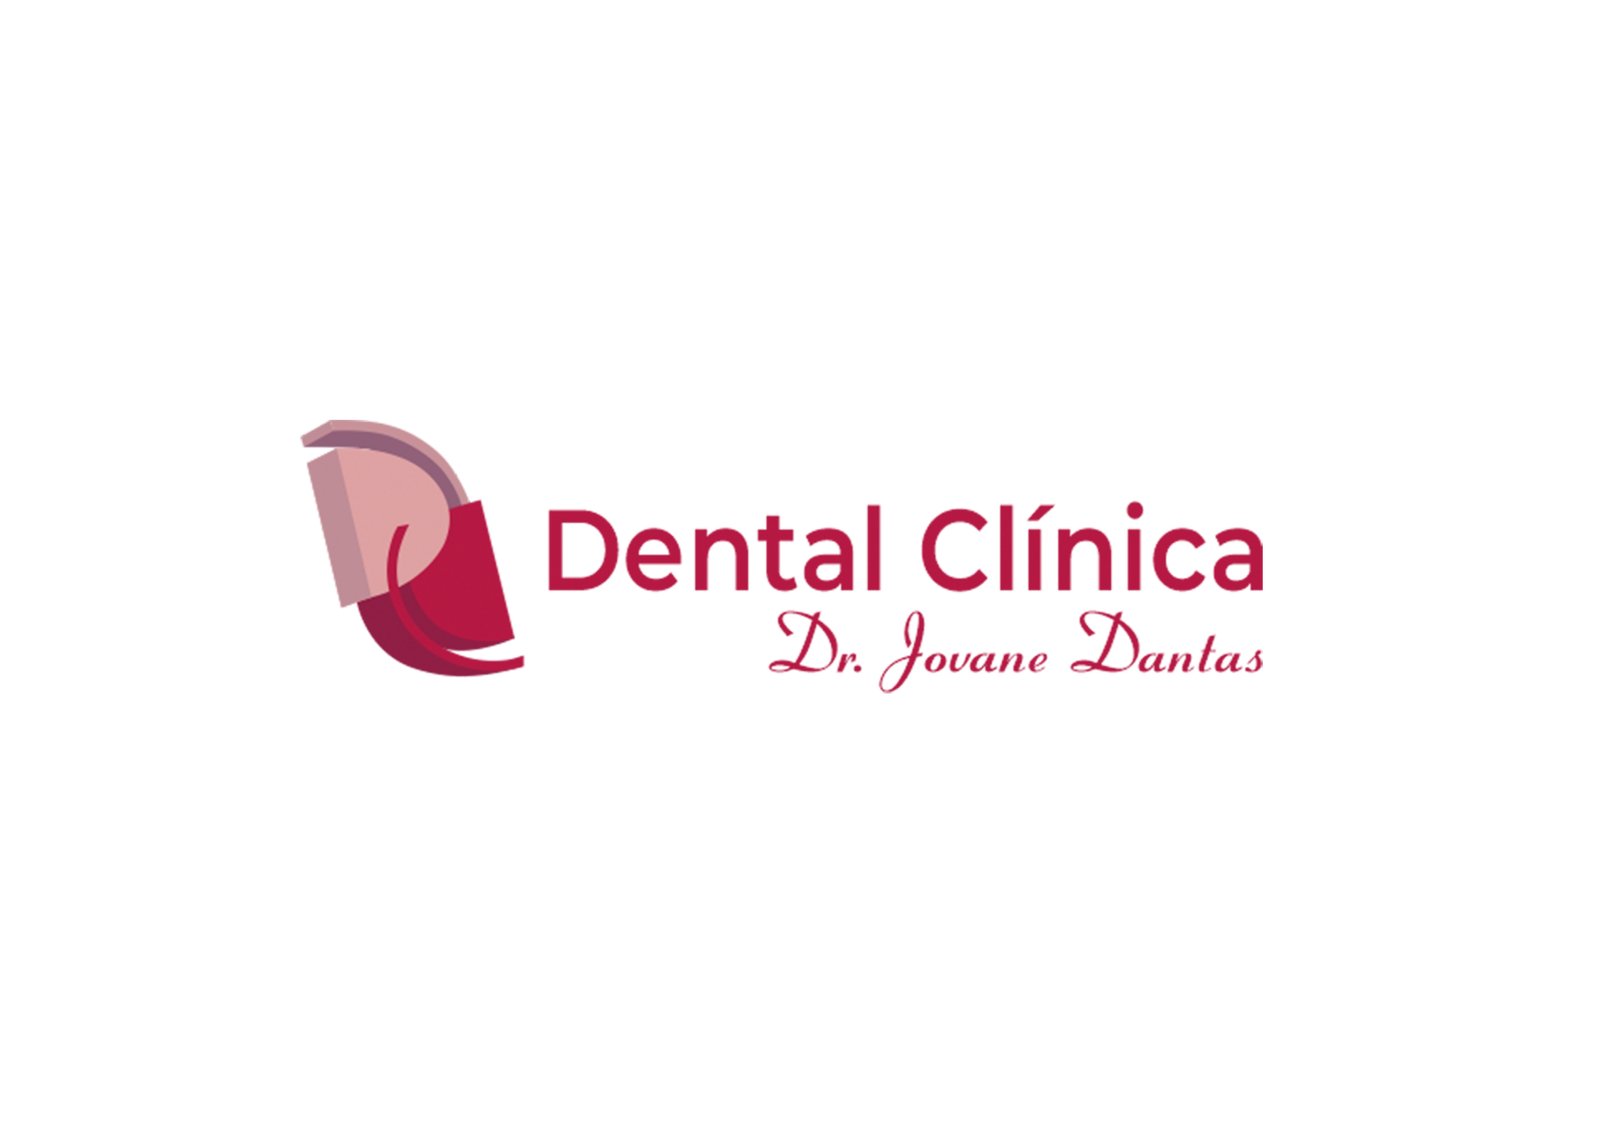 Dental Clinica